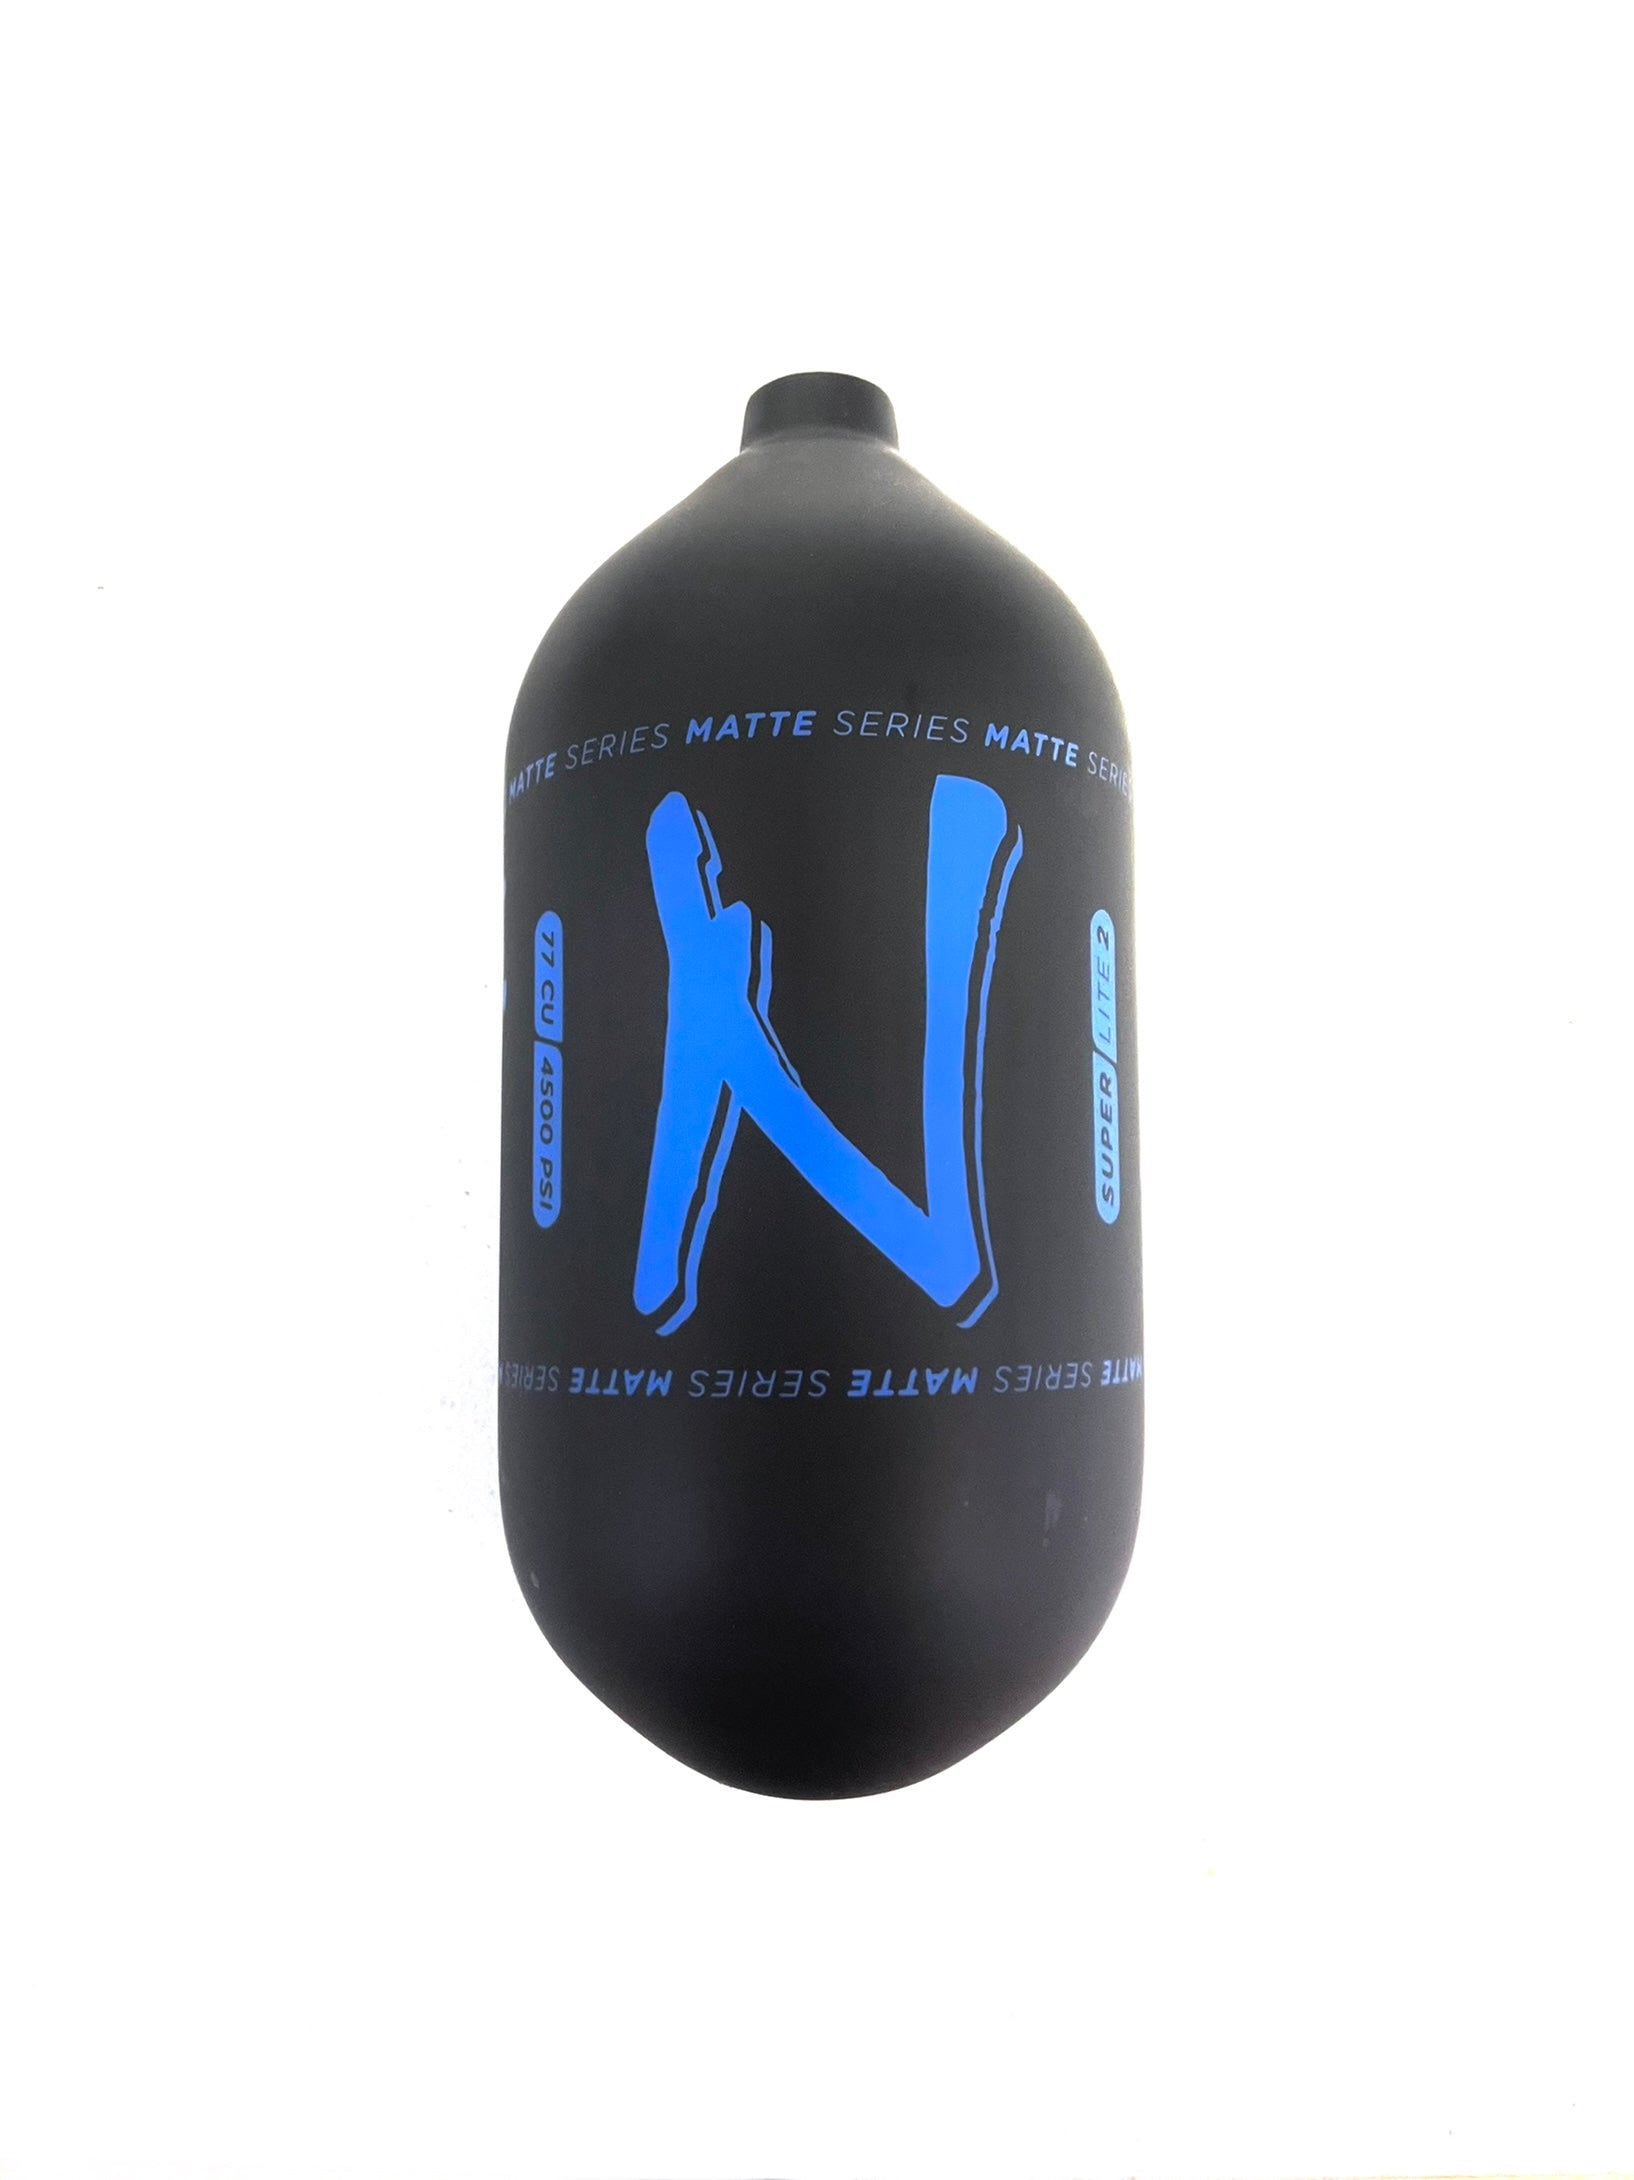 Ninja SL2 77/4500 "Matte Series" Carbon Fiber Paintball Tank BOTTLE ONLY - Black/Blue